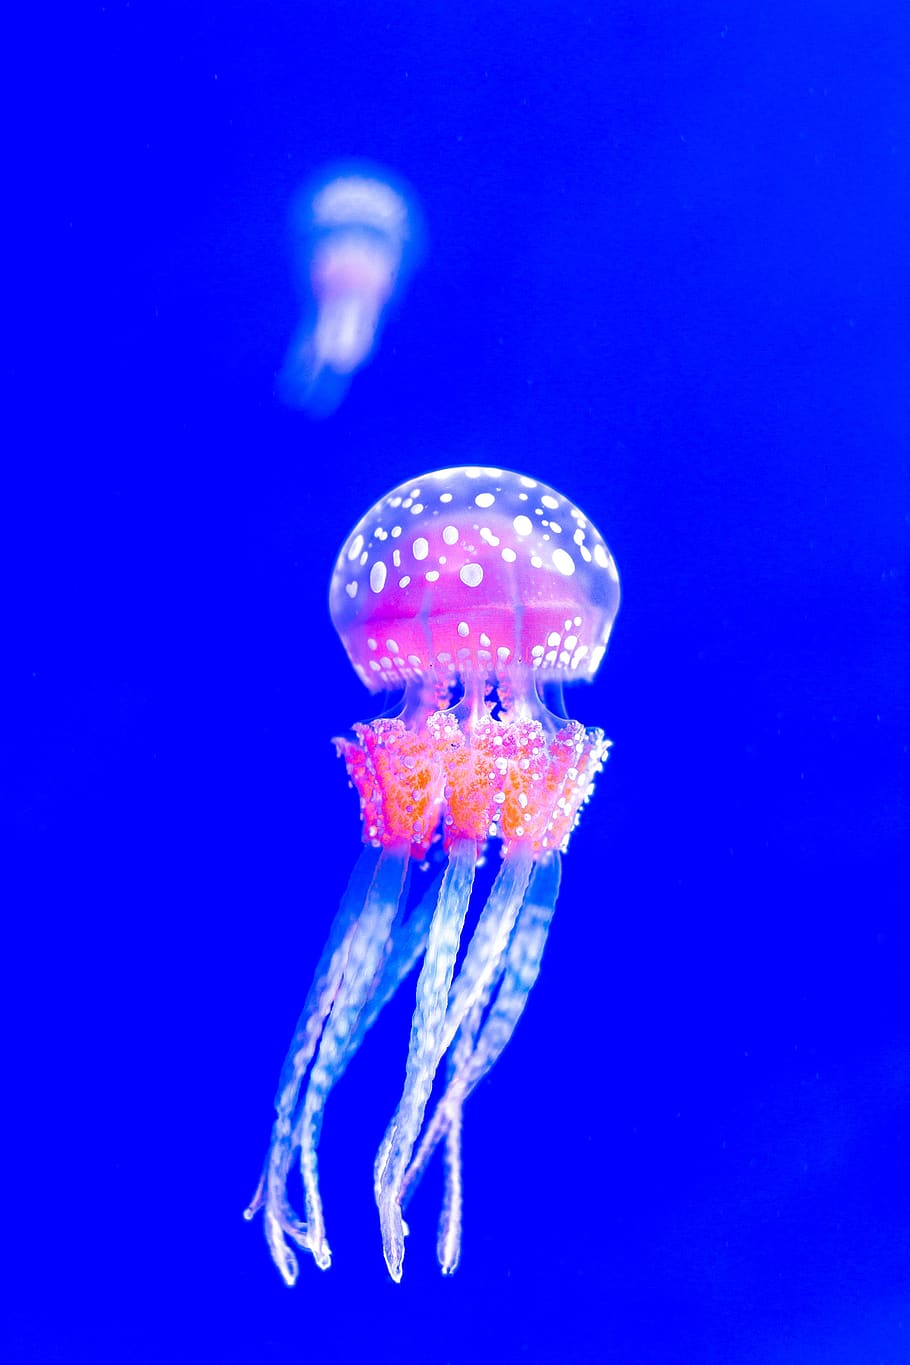 jellyfish, desktop, underwater, bright, nature, biology, color, science, insubstantial, health